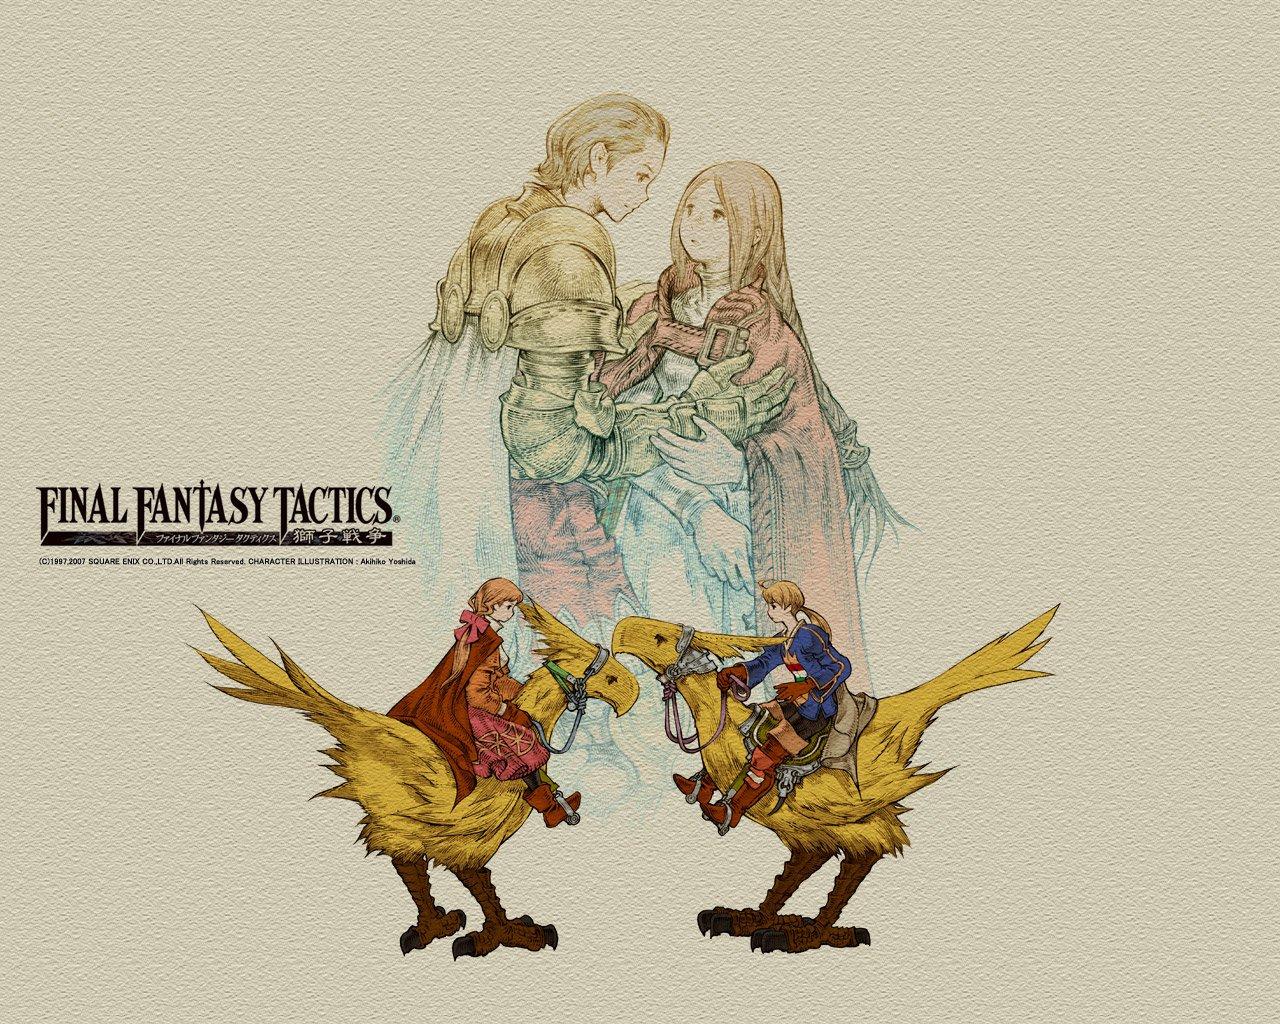 Final Fantasy Tactics Wallpaper and Background Imagex1024